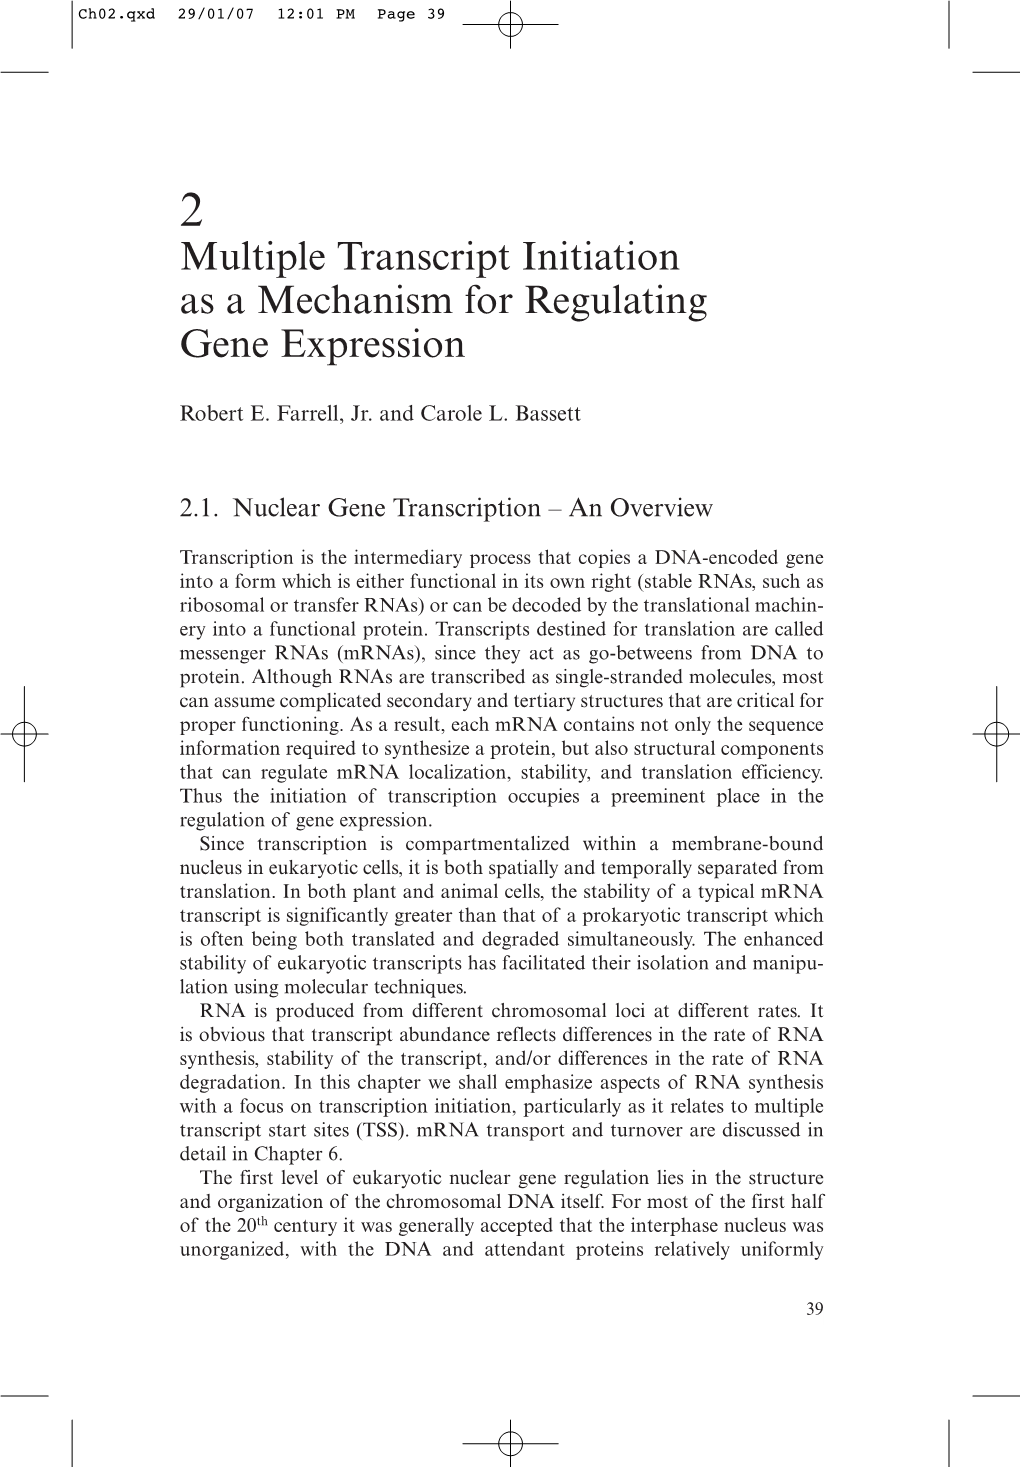 Multiple Transcript Initiation As a Mechanism for Regulating Gene Expression